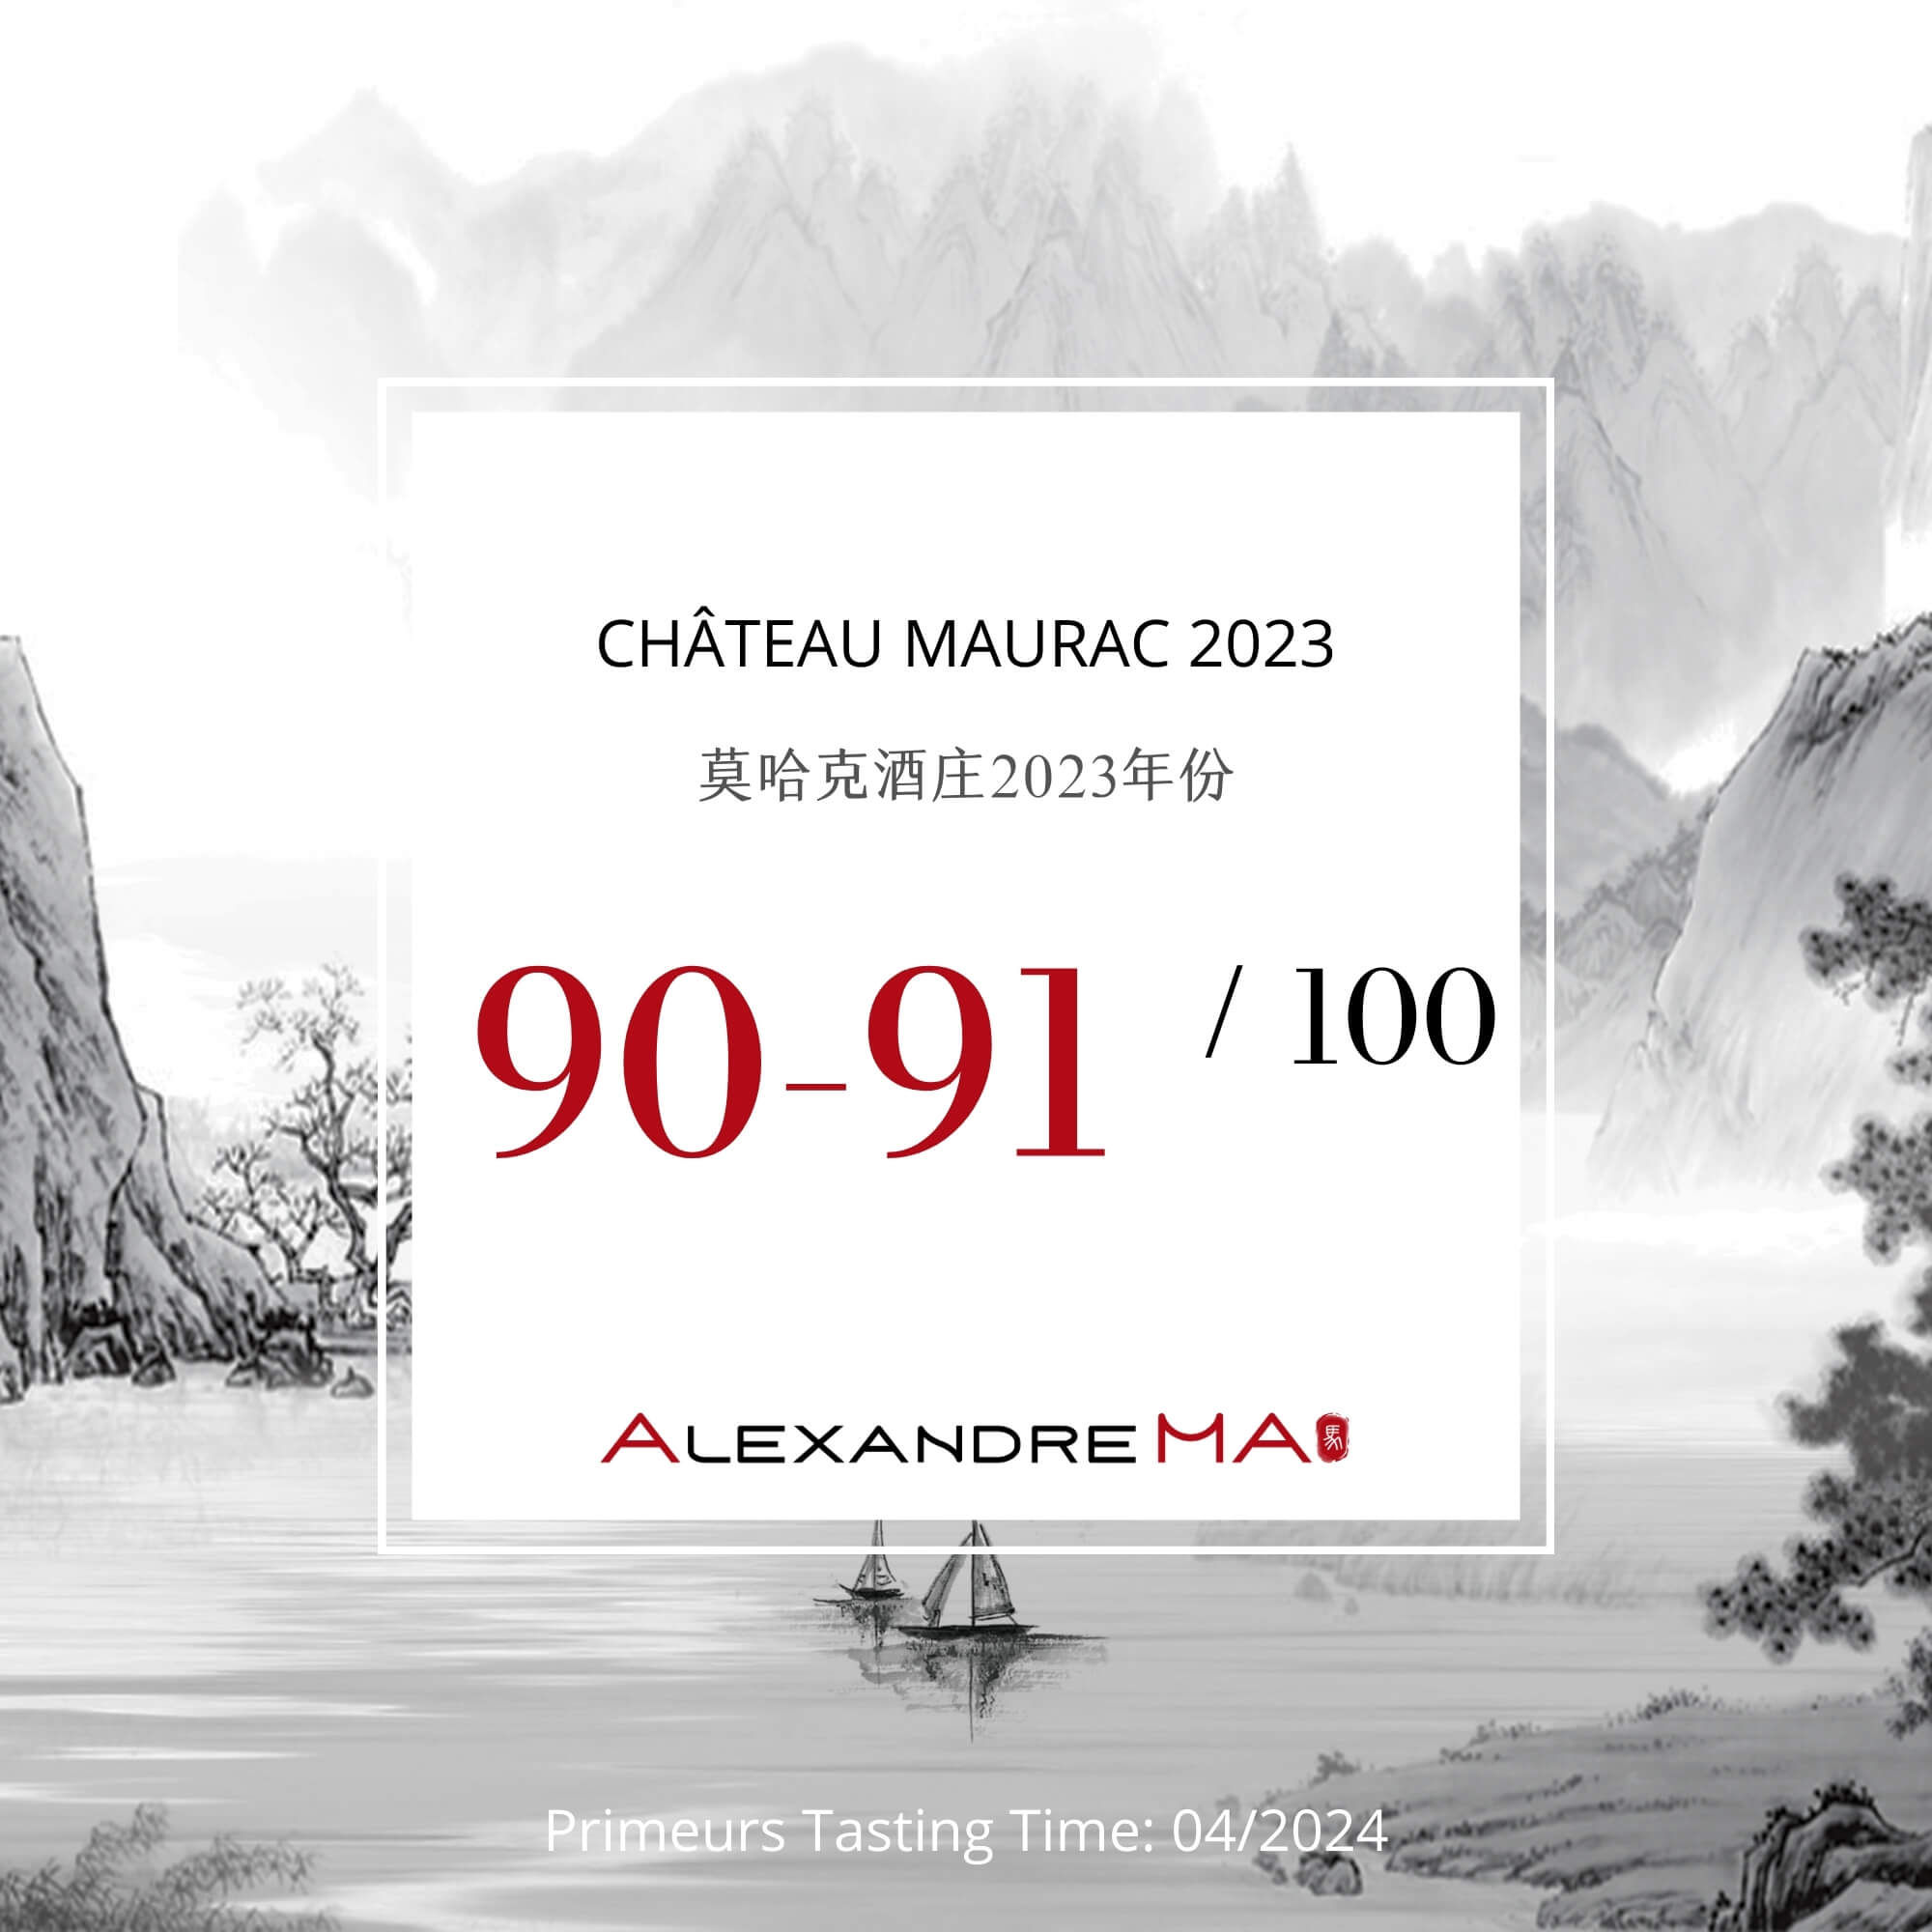 Château Maurac 2023 Primeurs - Alexandre MA